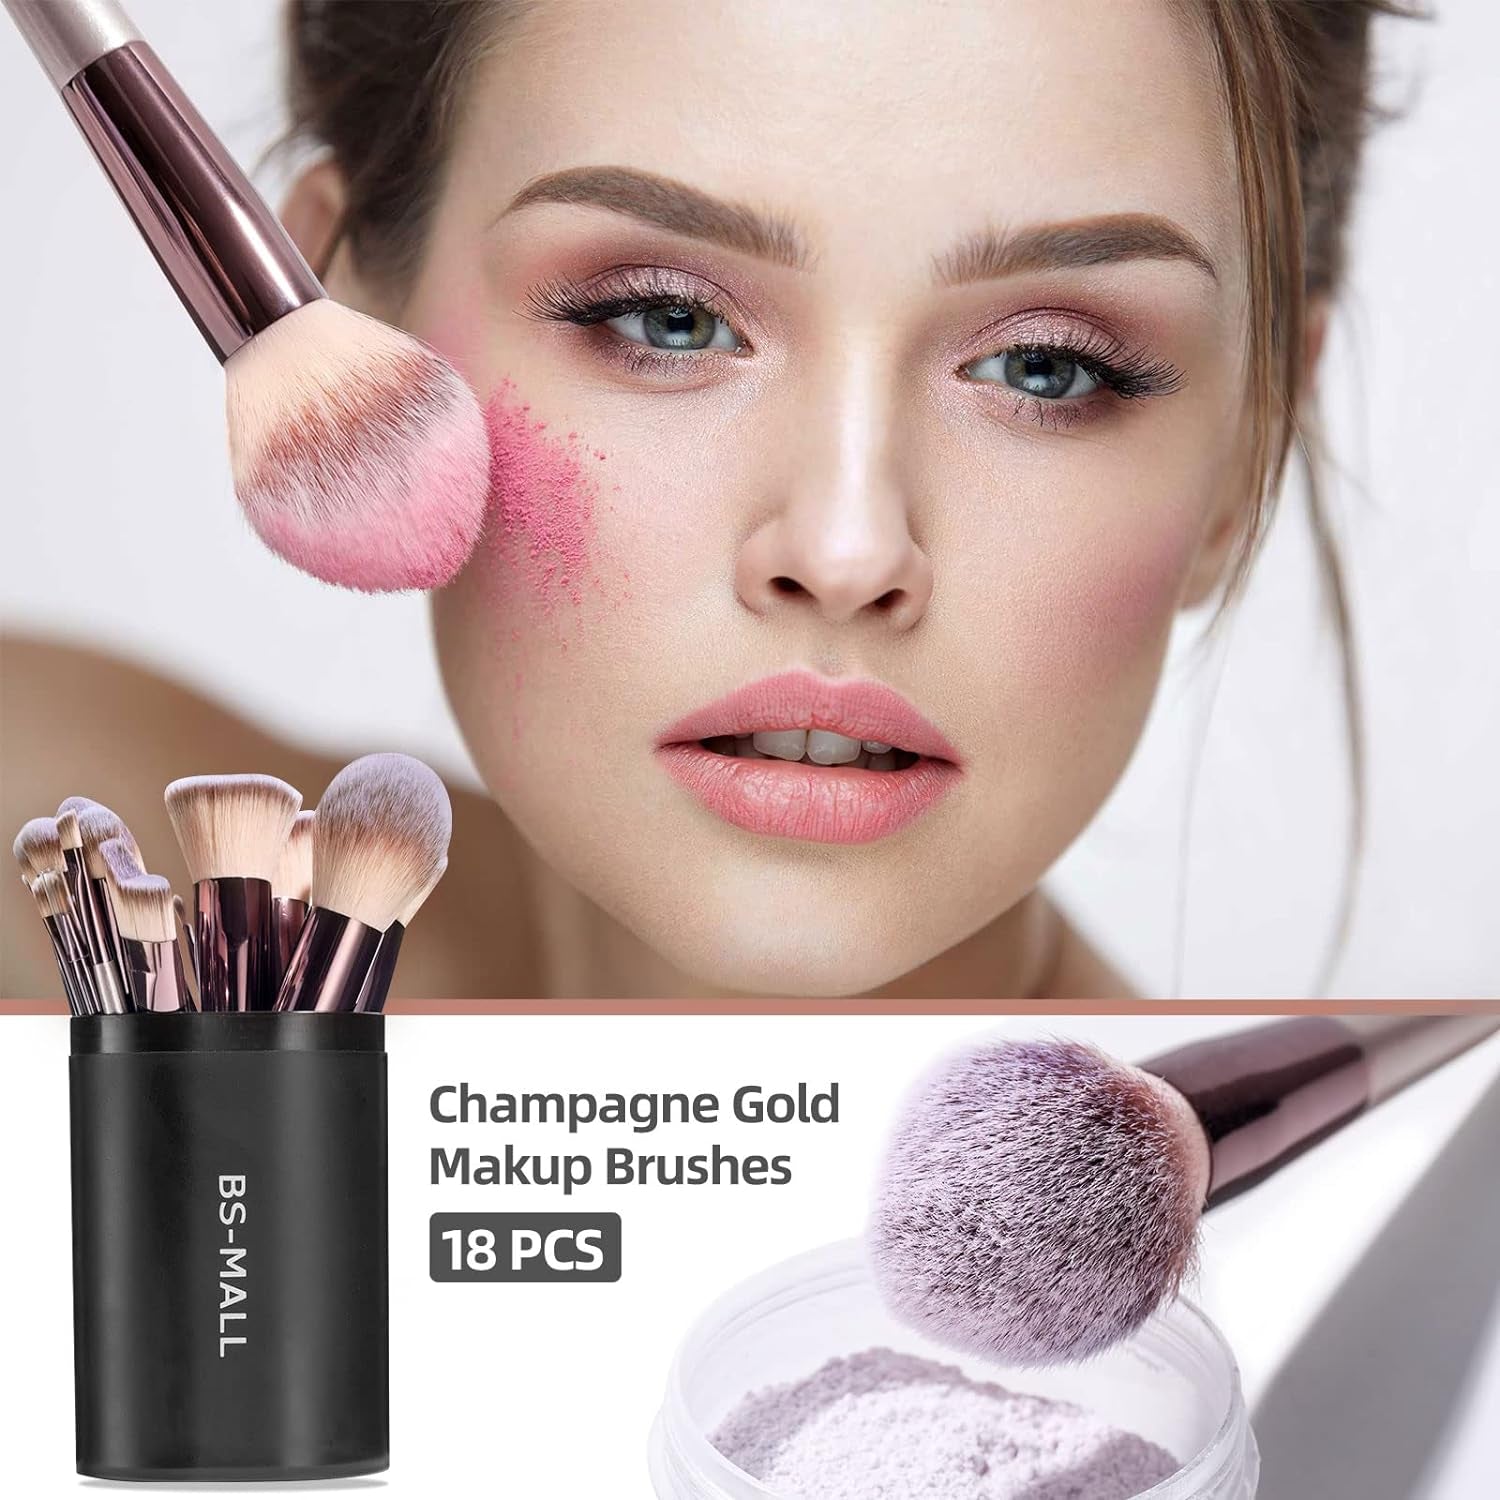 18pcs Soft Bristled Makeup Brushes